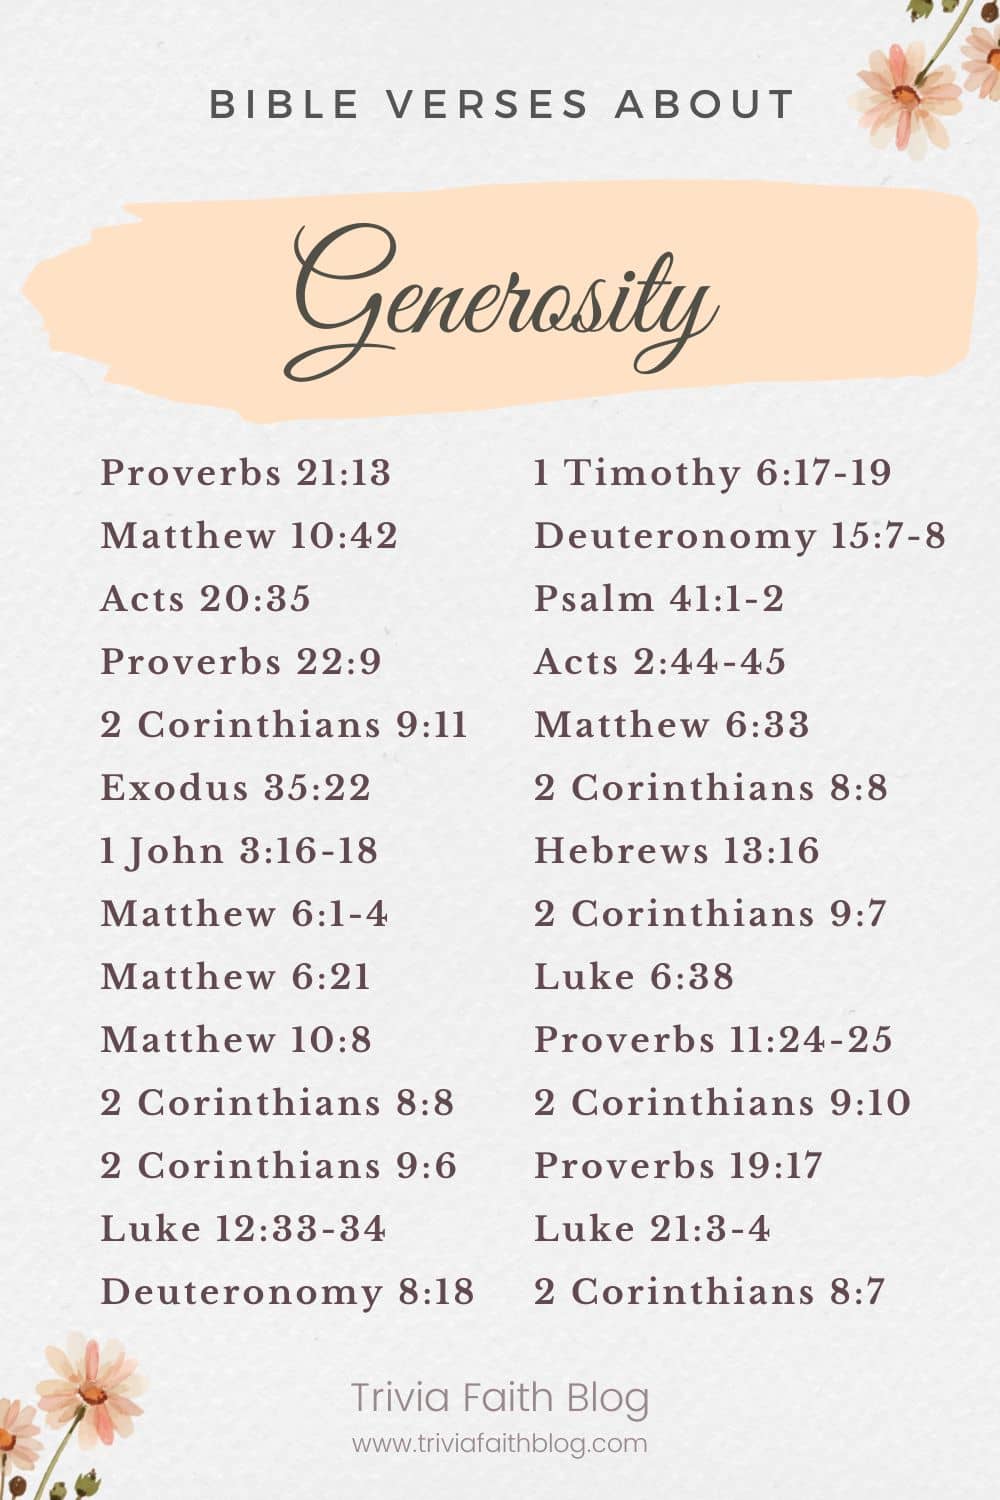 Bible verses about generosity